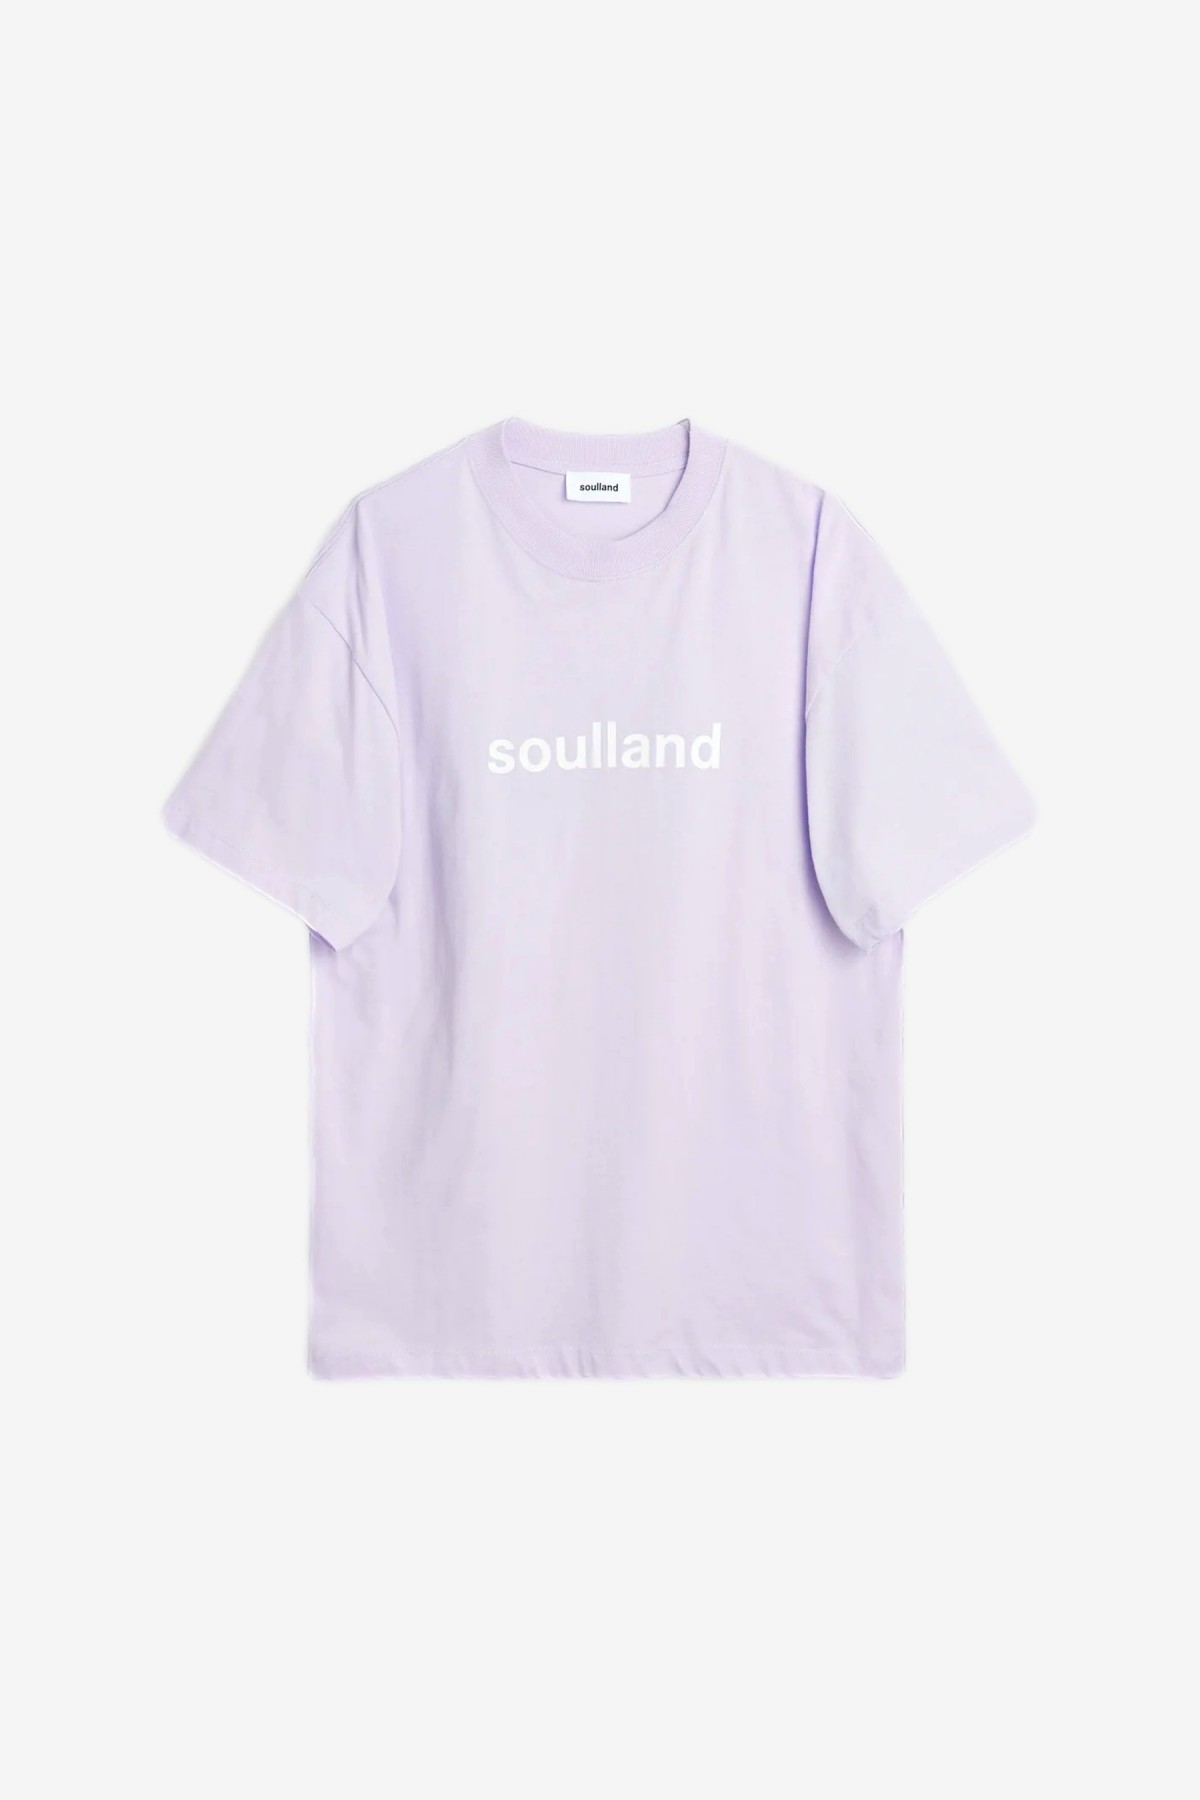 Soulland Ocean T-Shirt in Pastel Lilac